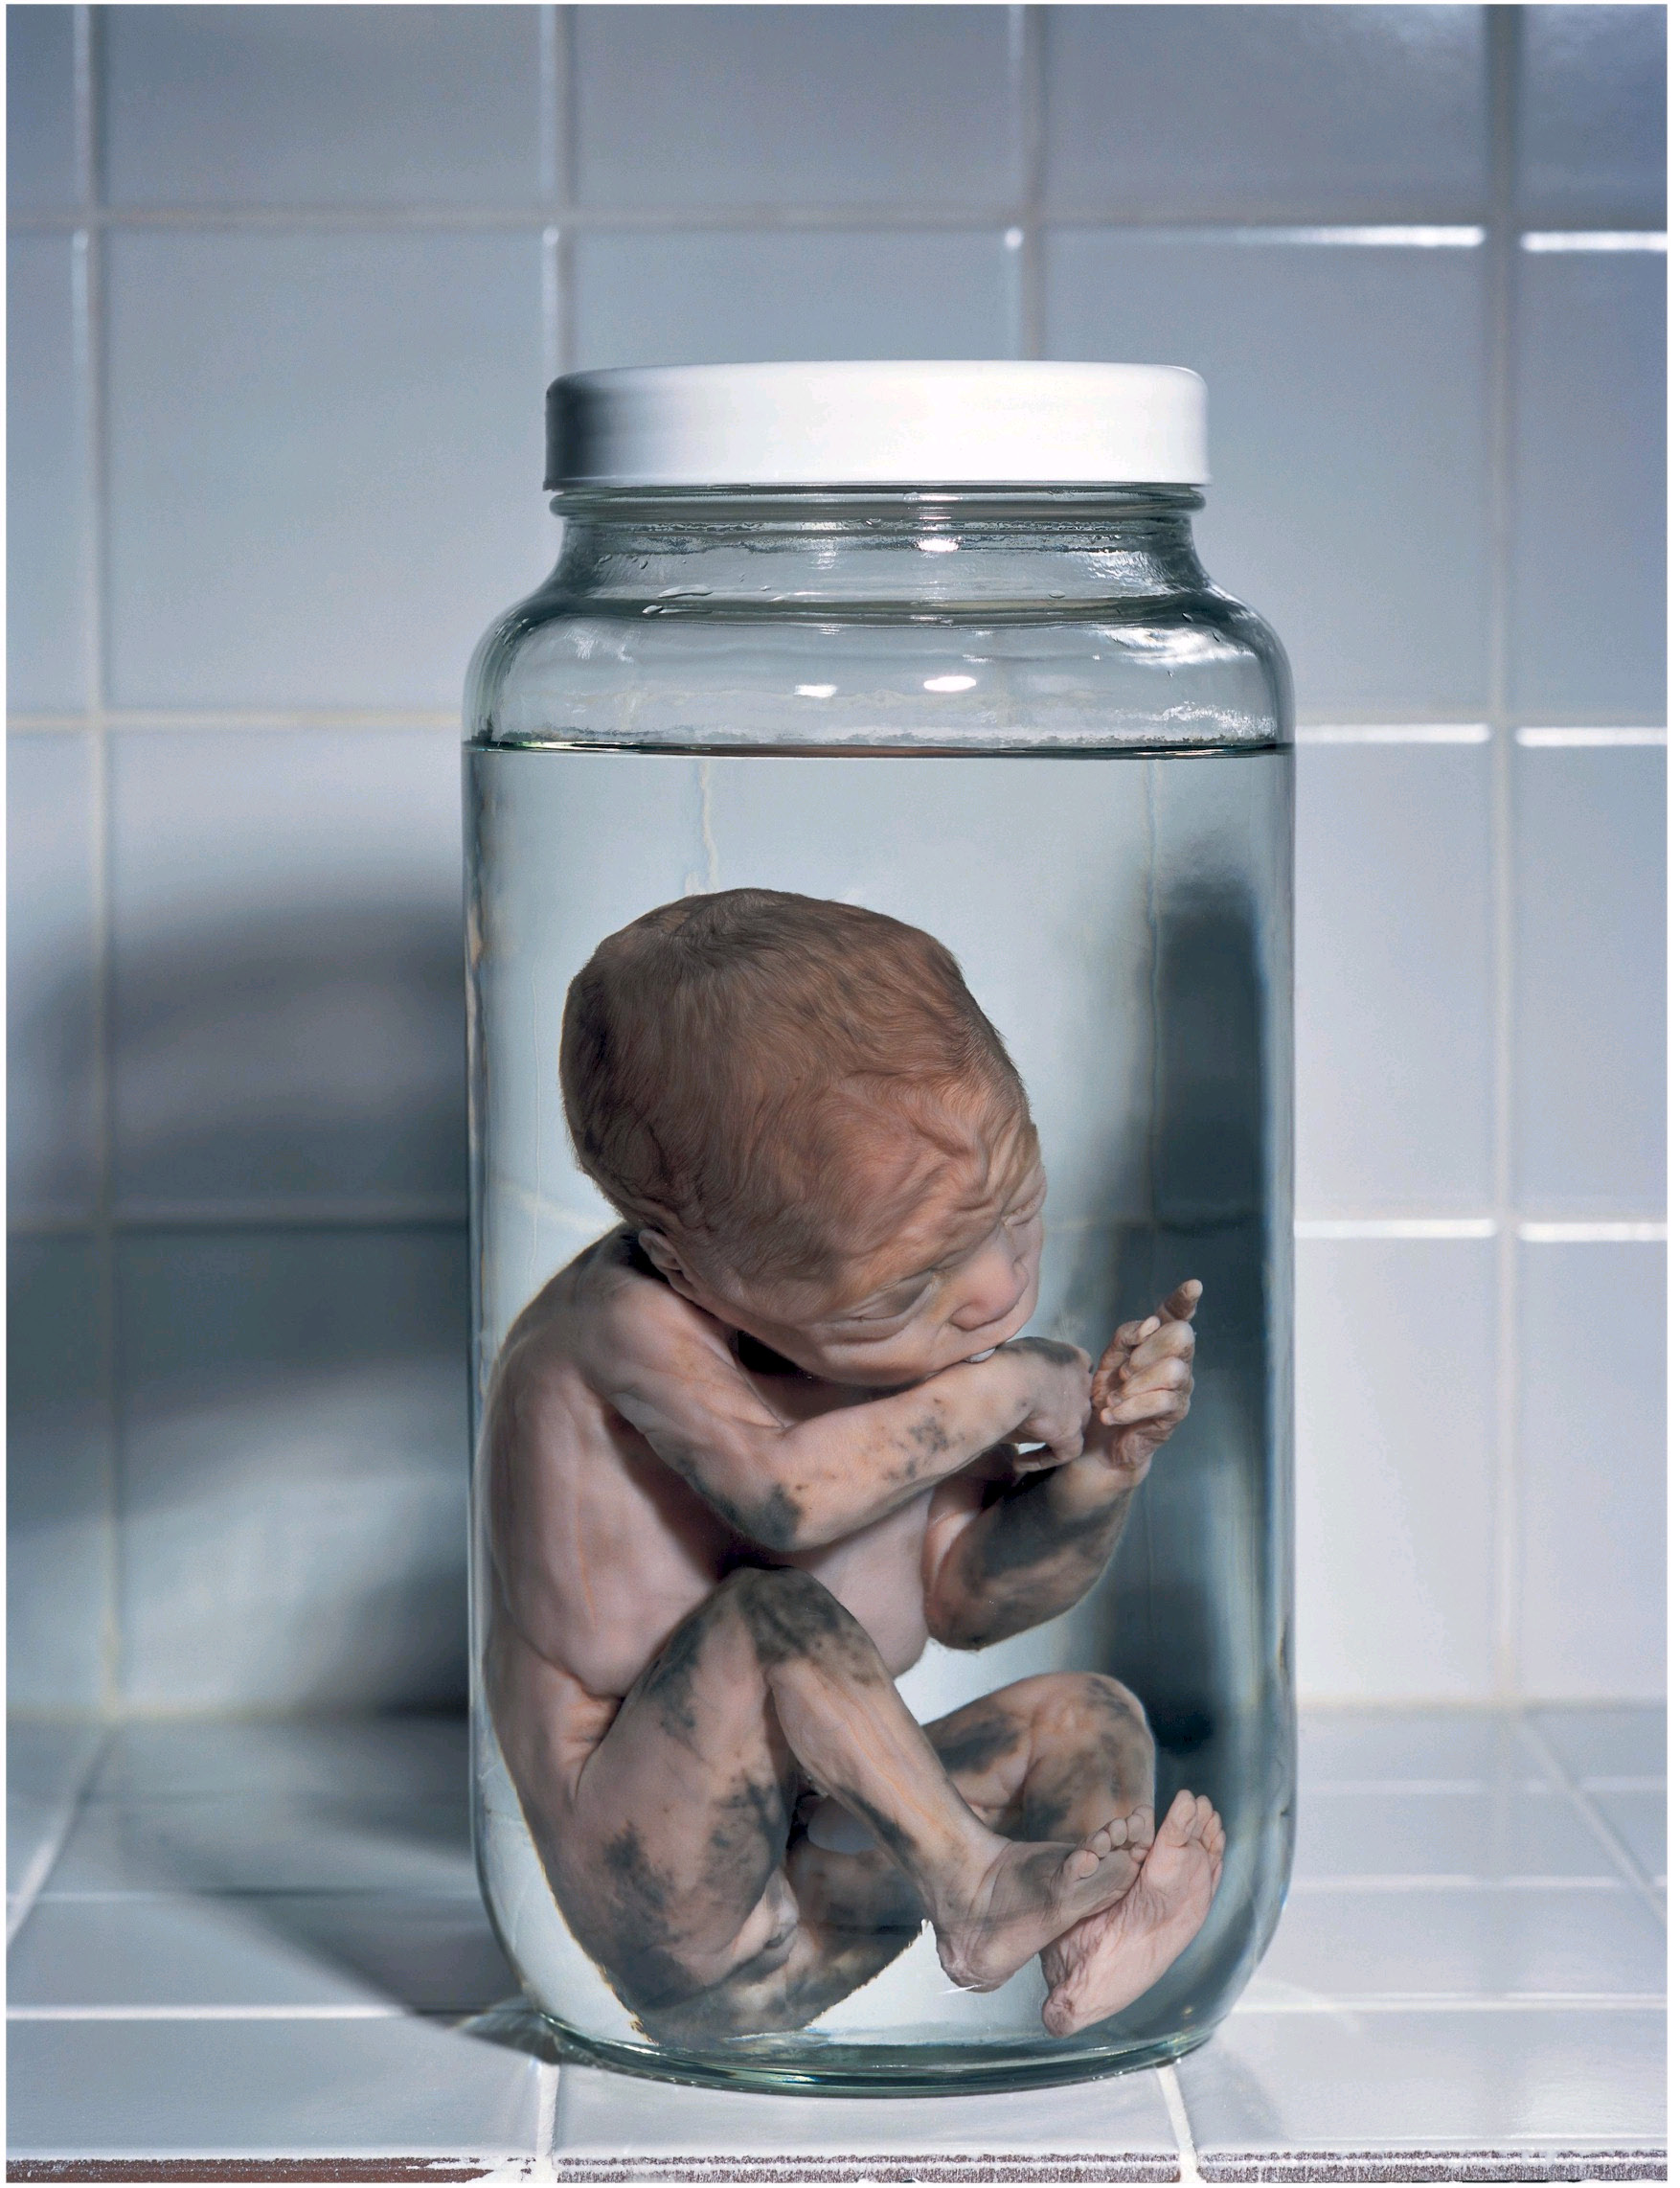 Brazil 2004 ETS baby - pregnant women, spontaneous abortion, graphic